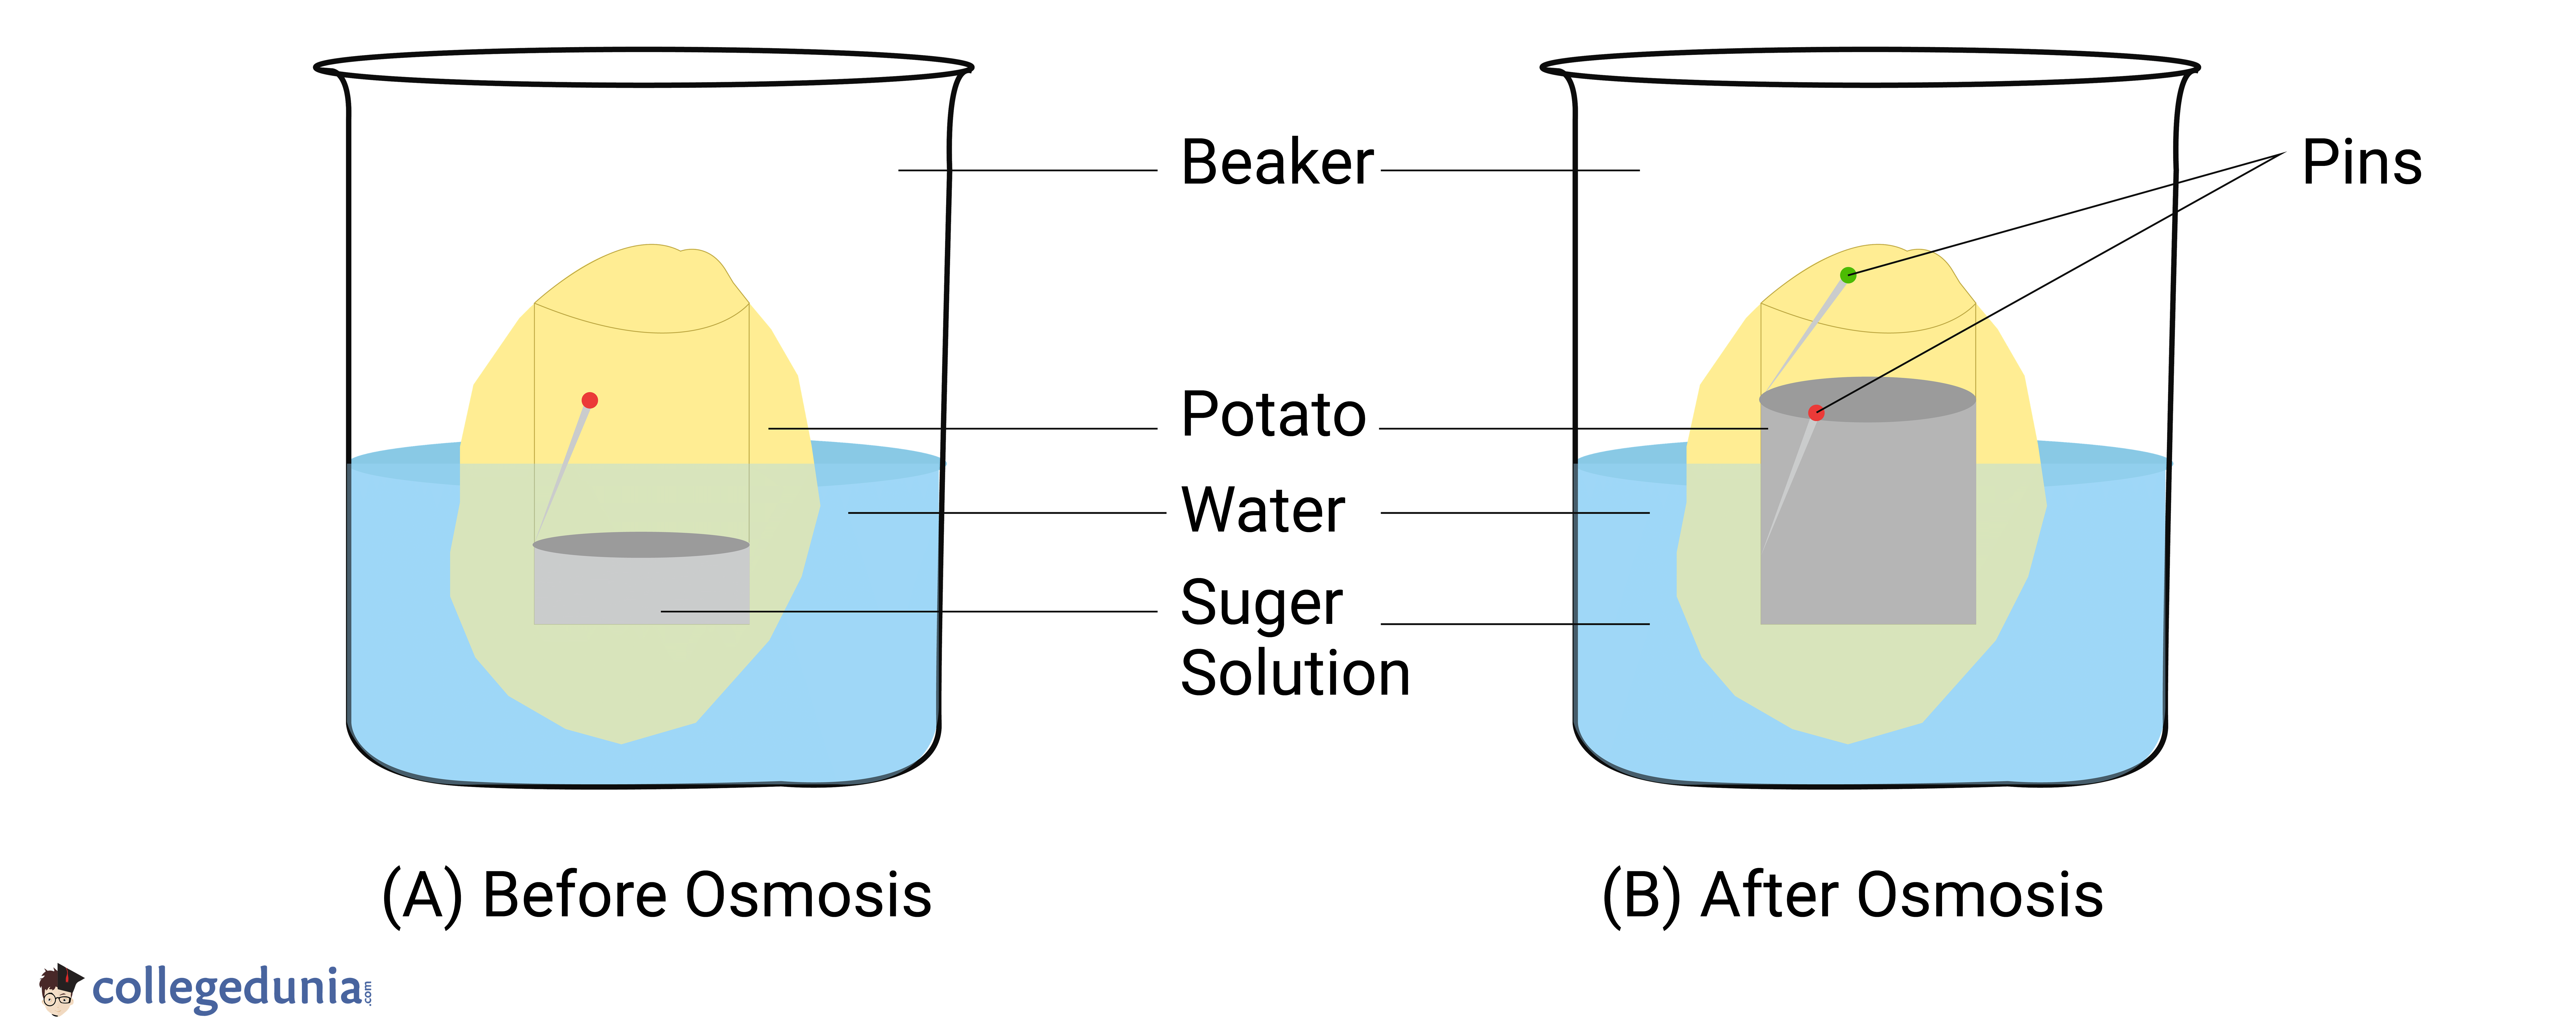 Study of Osmosis by Potato Osmometer